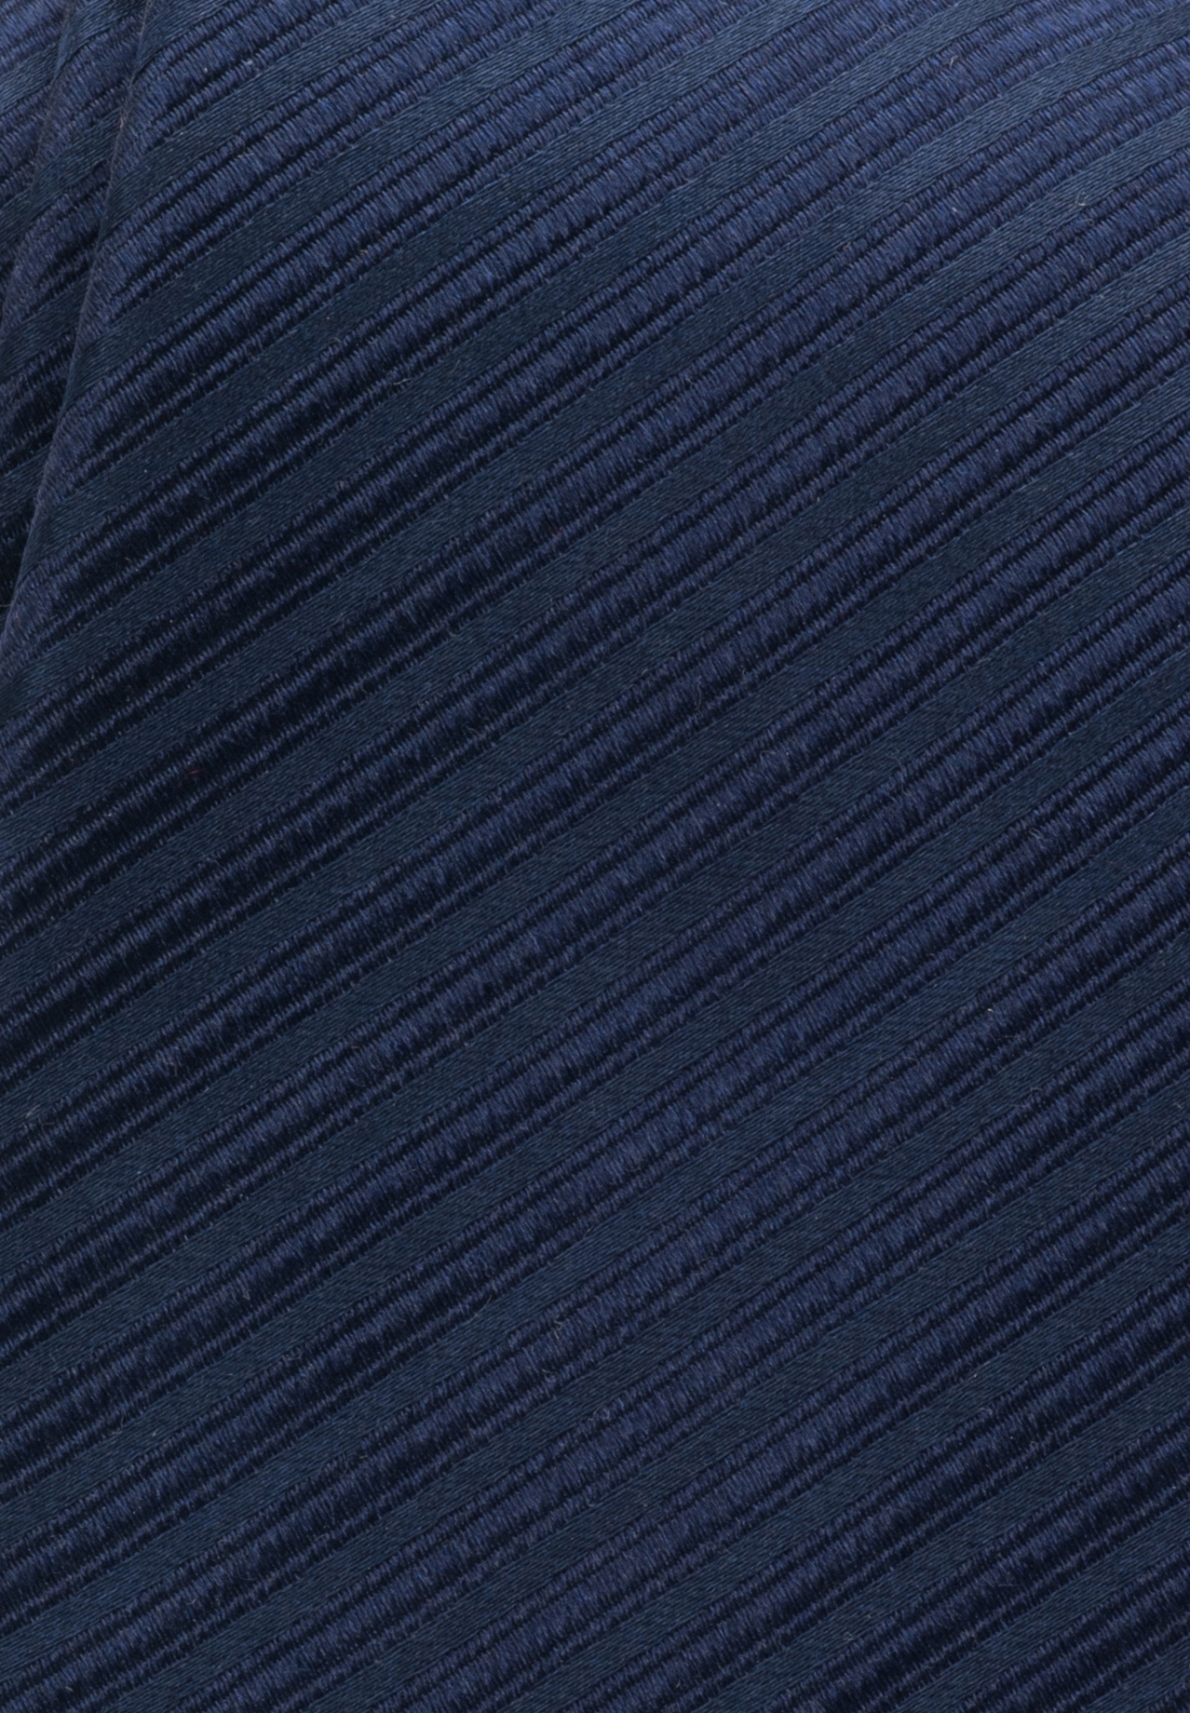 Eterna Krawatte dunkelblau gestreift 9716-19 MODE SPEZIALIST 